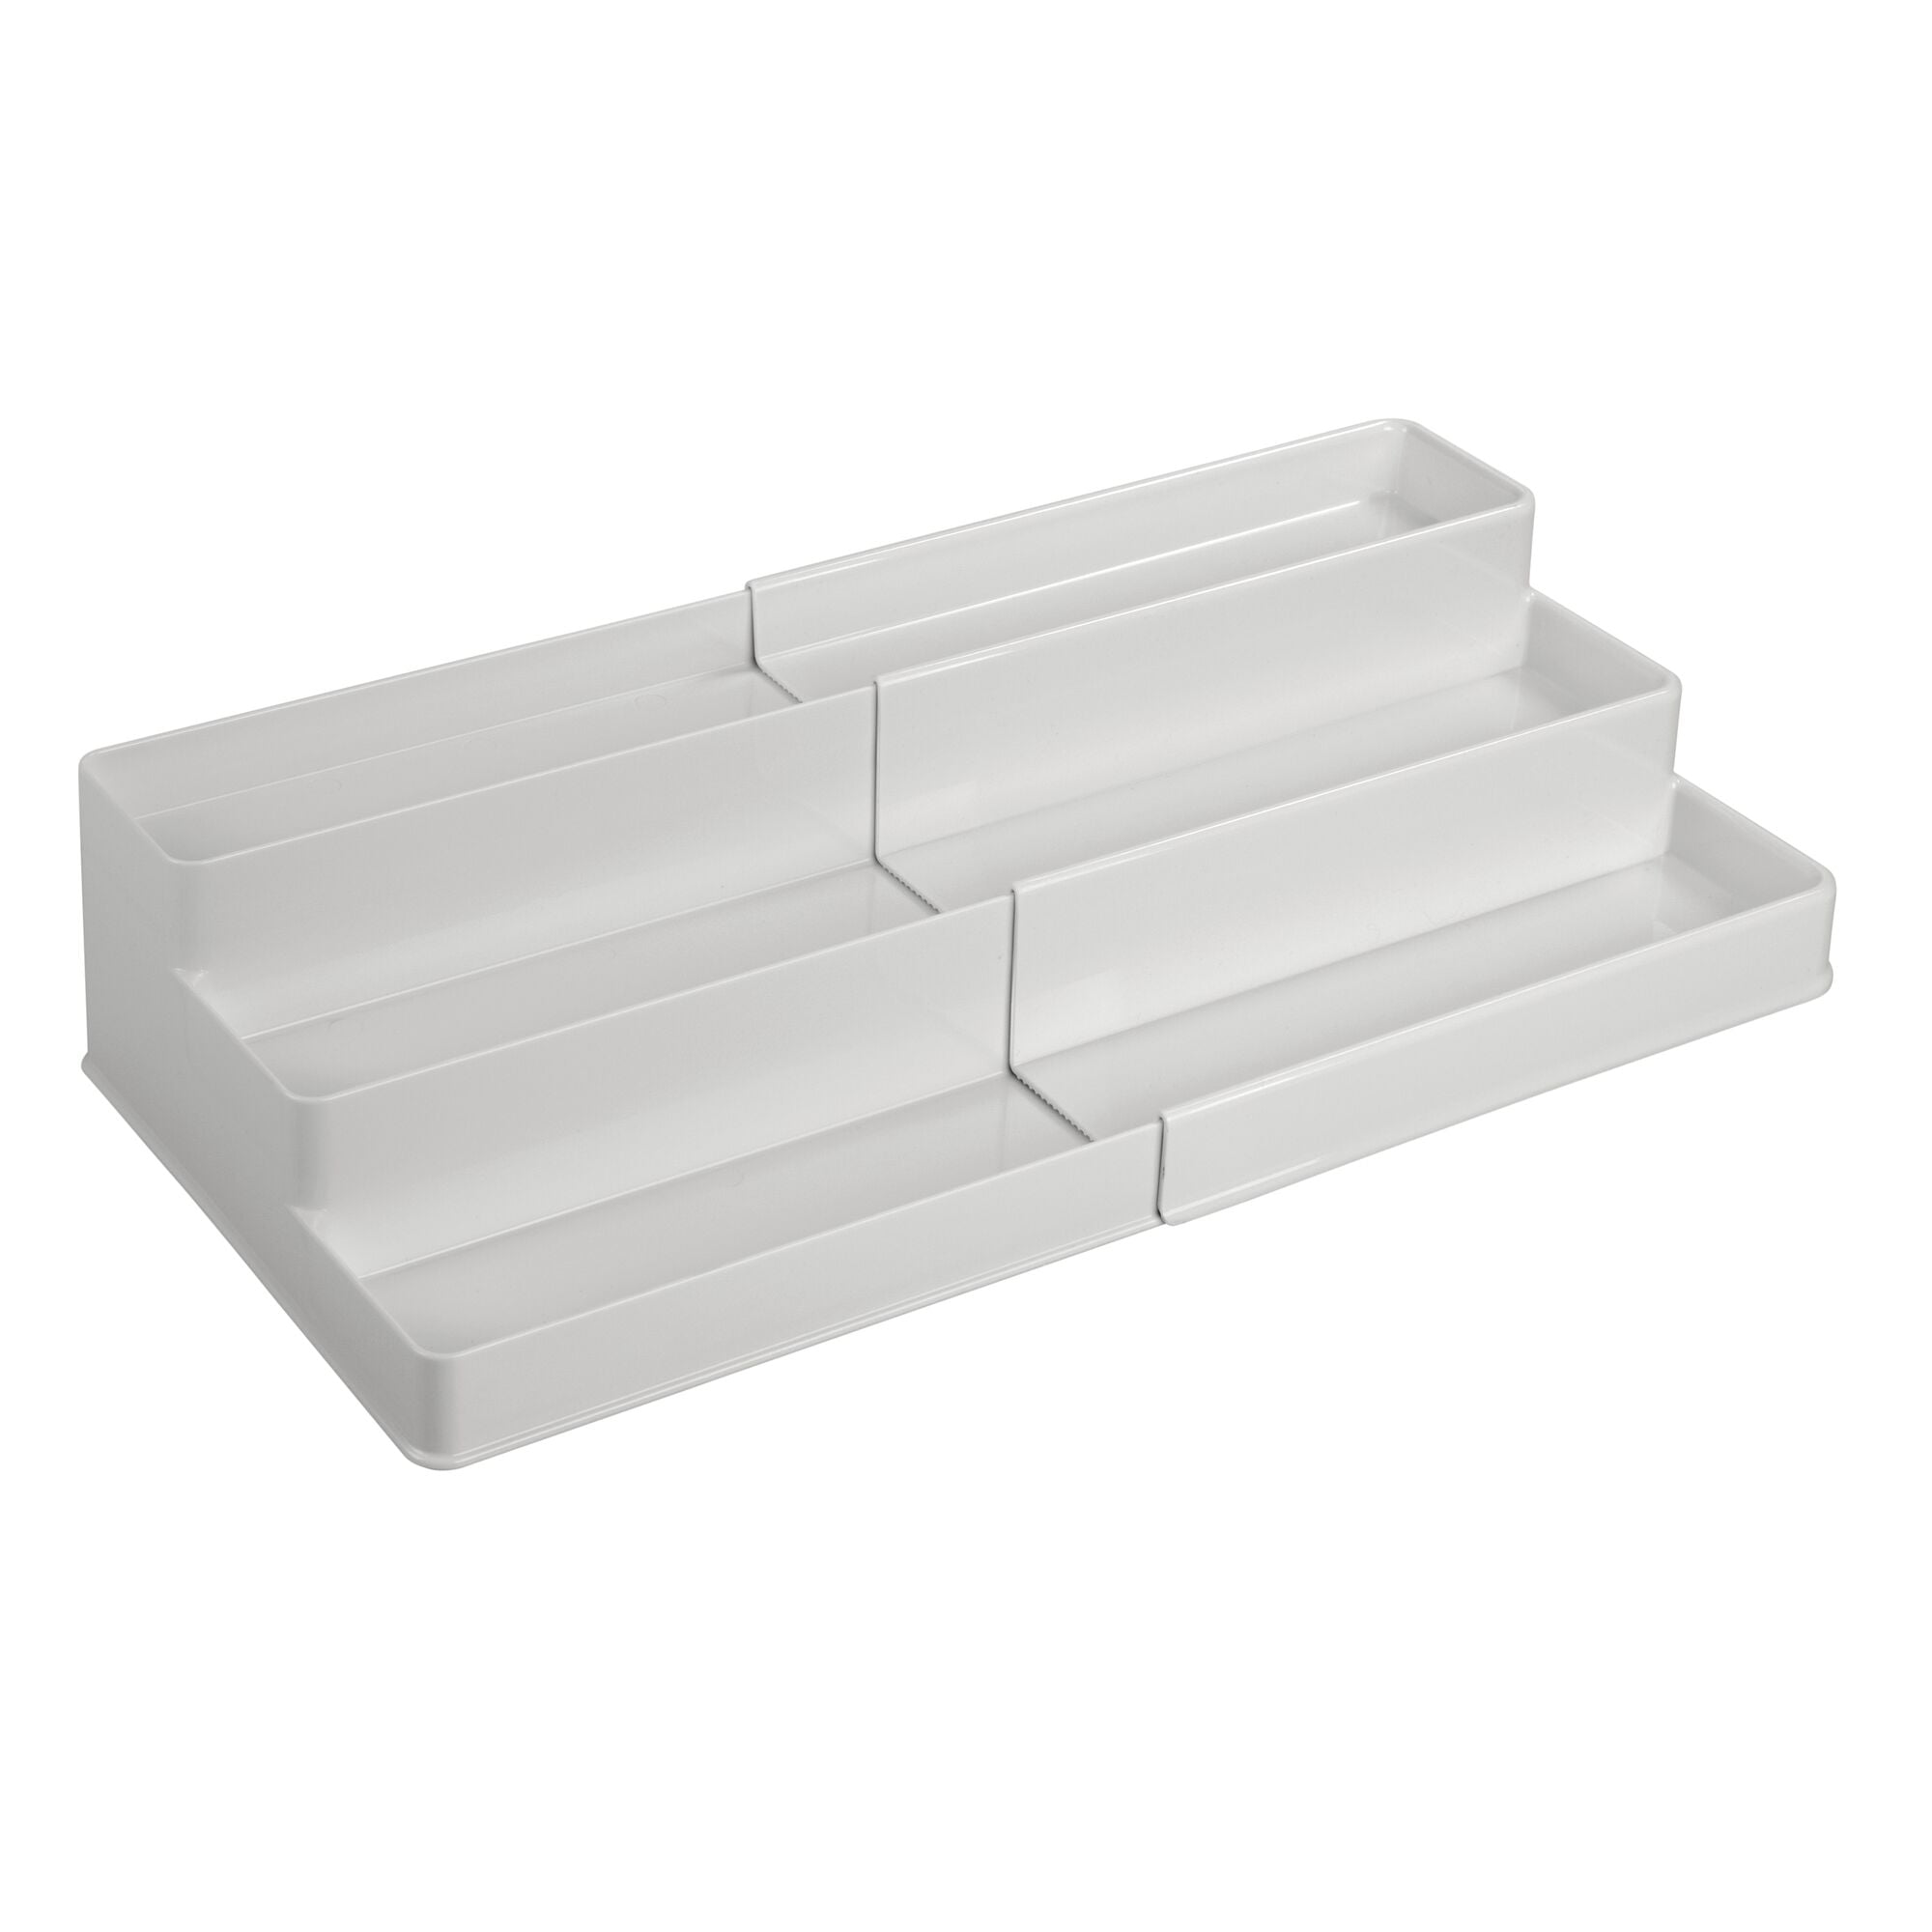 mDesign Plastic Bathroom Storage Organizer Shelf for Cabinet, Vanity, Countertop - Holds Vitamins, Supplements, Medicine Bottles